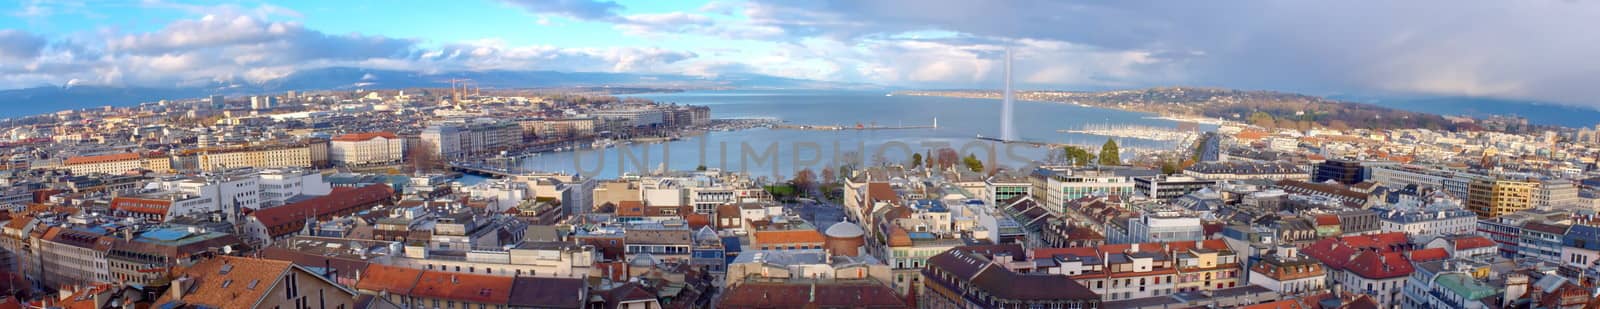 Geneva city panorama, Switzerland (HDR) by Elenaphotos21